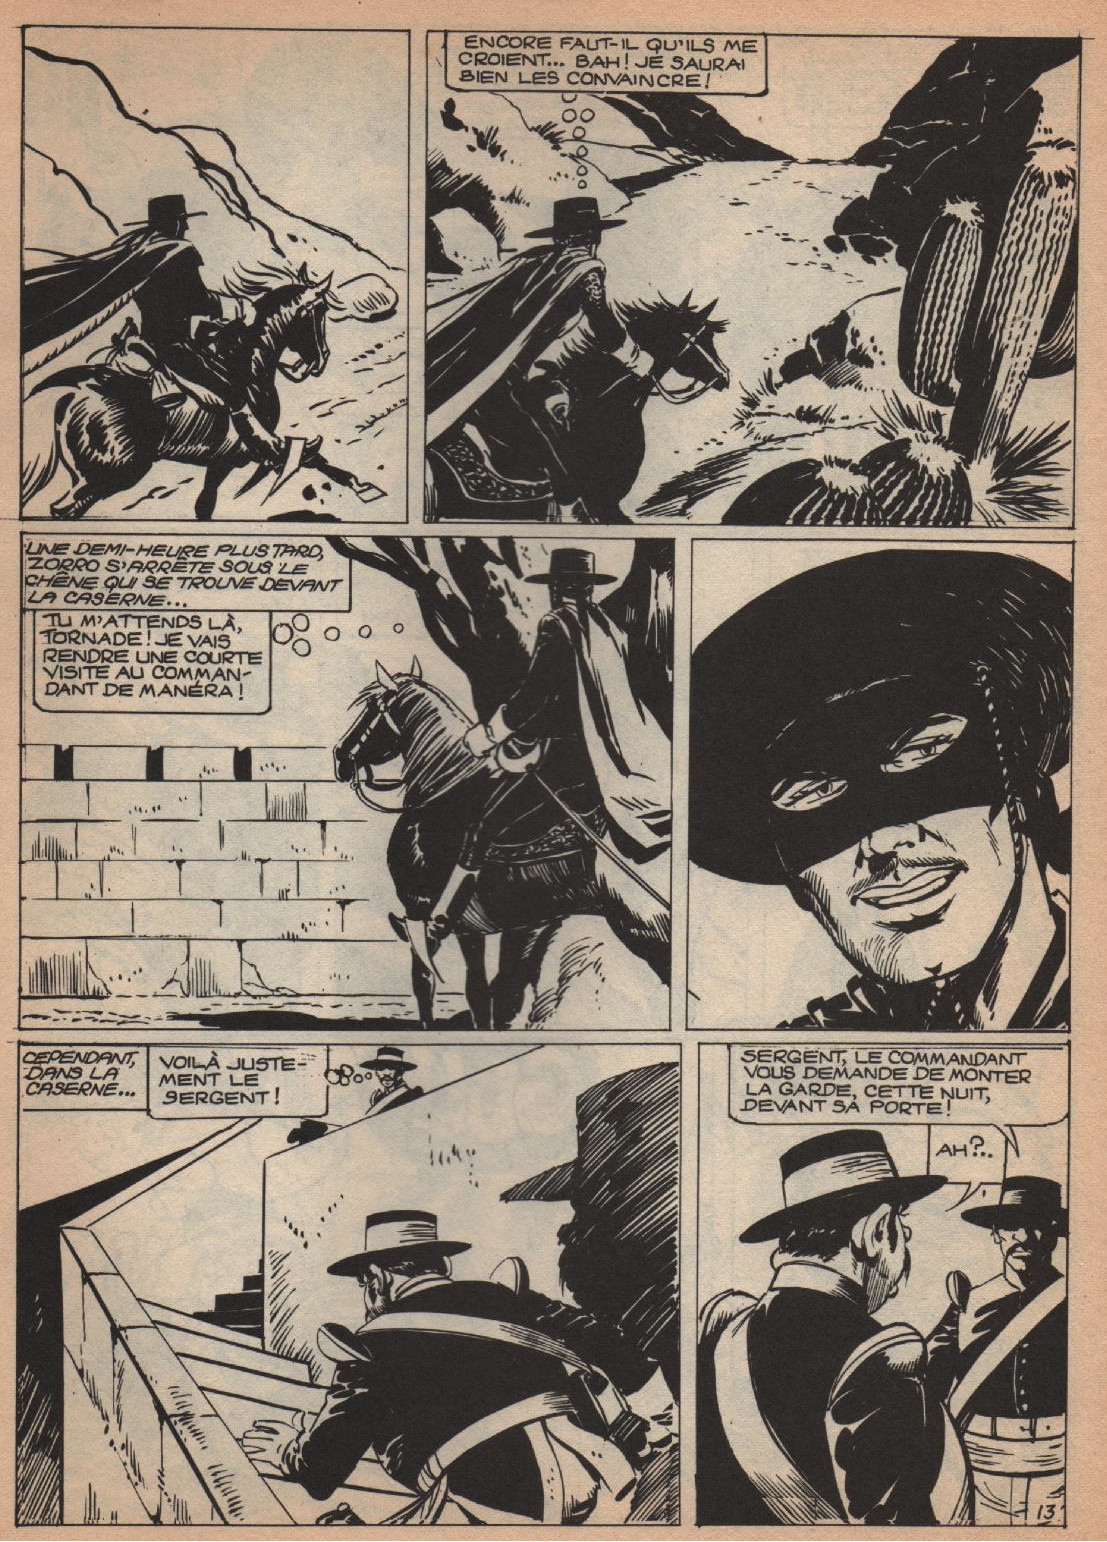 « Zorro : Les Espions » : Zorro géant n° 3 (1986).